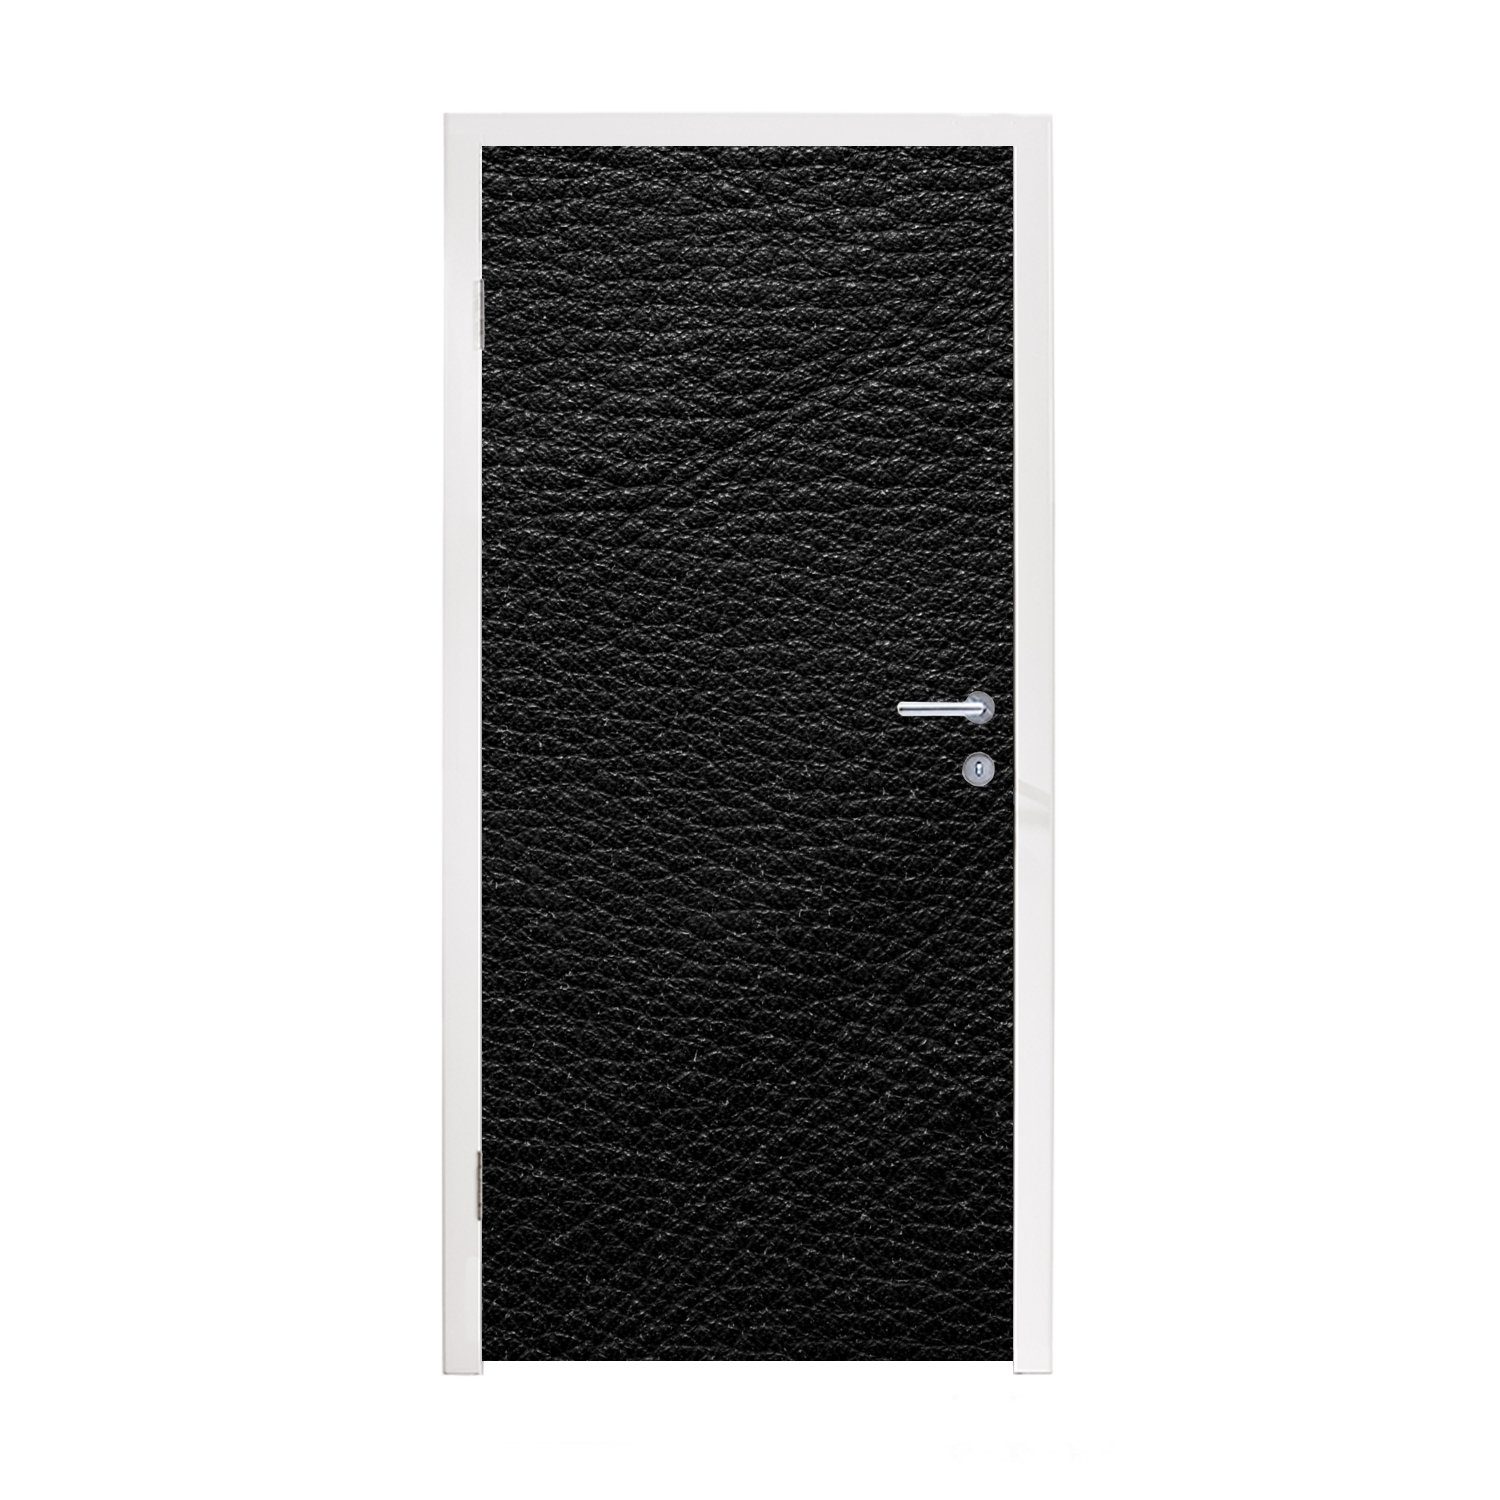 MuchoWow Türtapete Leder - Lederoptik - Schwarz - Grau - Druck, Matt, bedruckt, (1 St), Fototapete für Tür, Türaufkleber, 75x205 cm